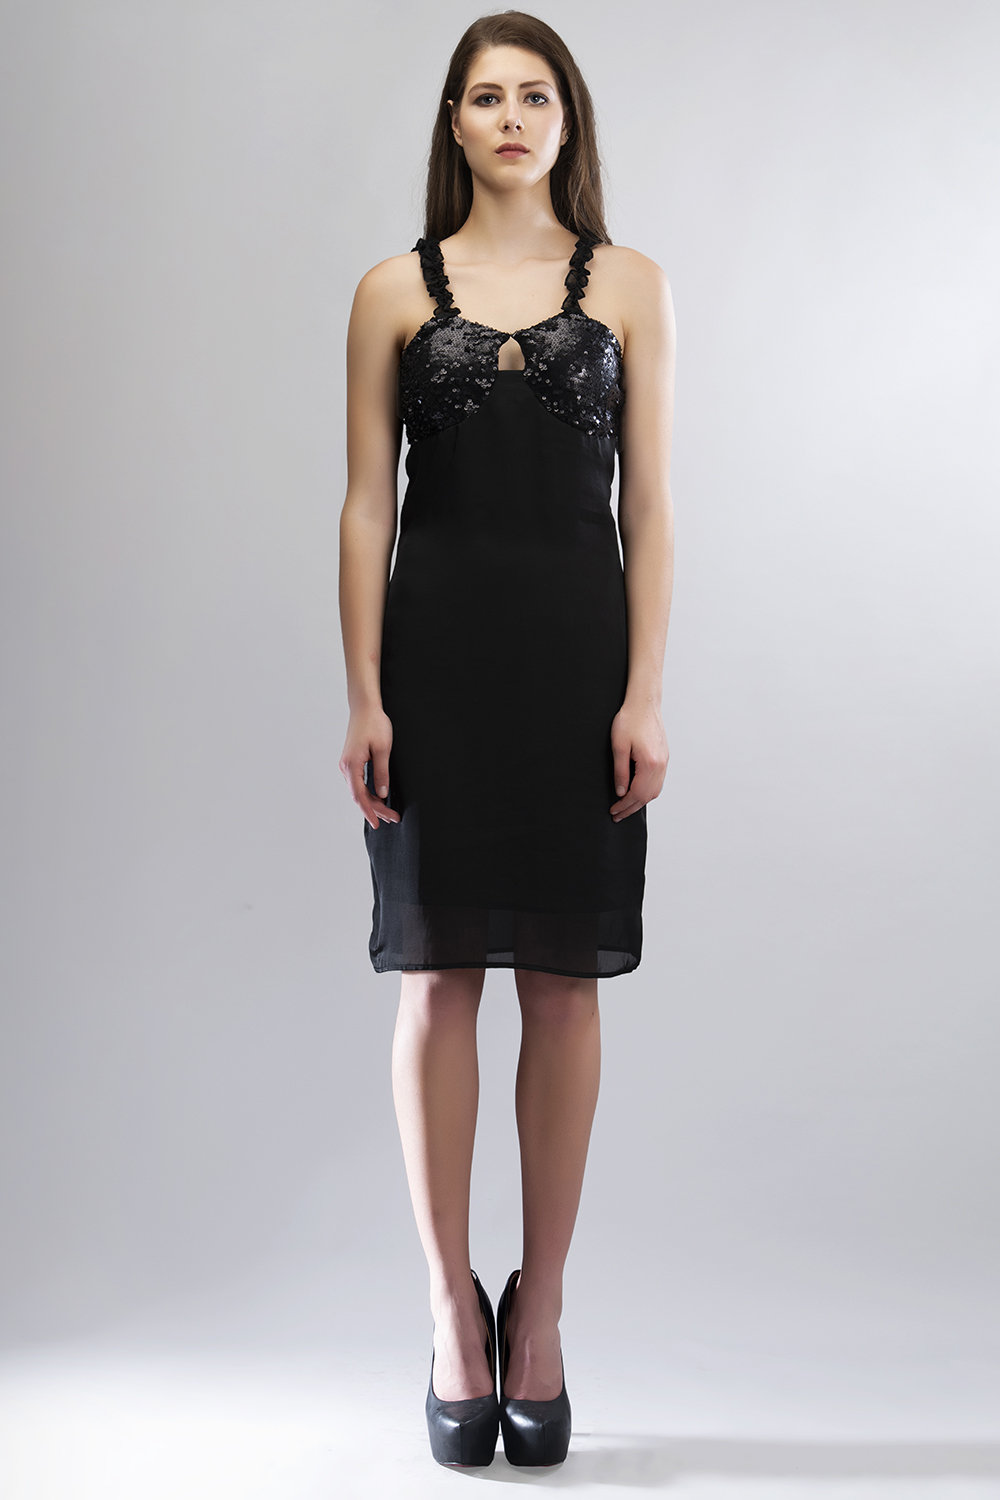 Sequin Black Short Dress -2